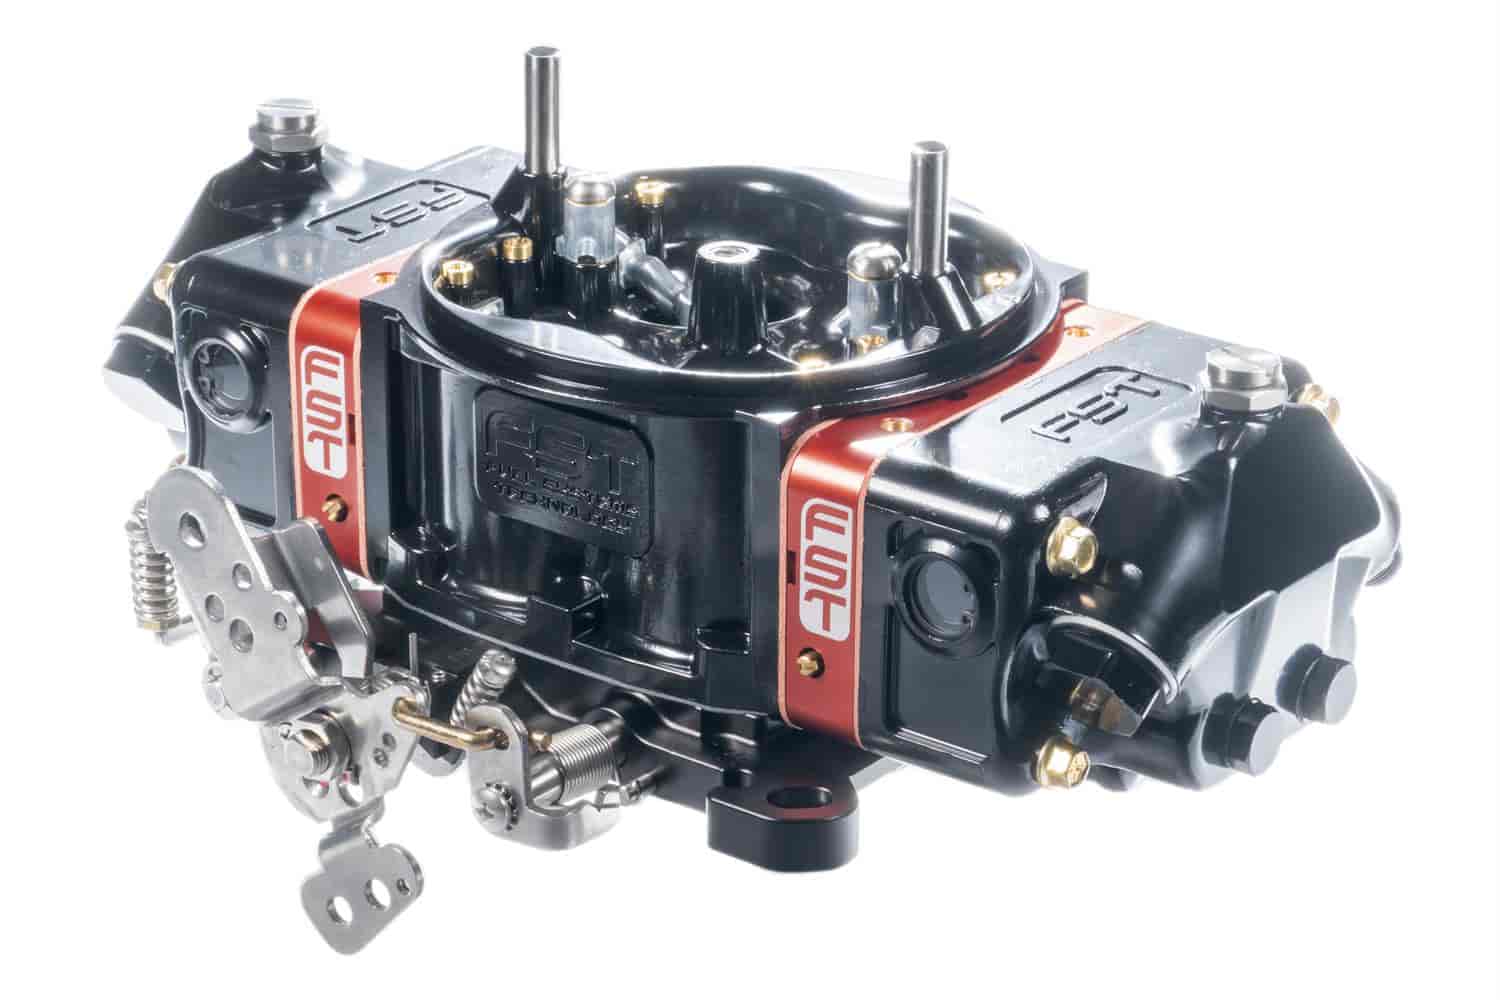 Forged RT-X 4-bbl Carburetor 750 CFM, Mechanical Secondary